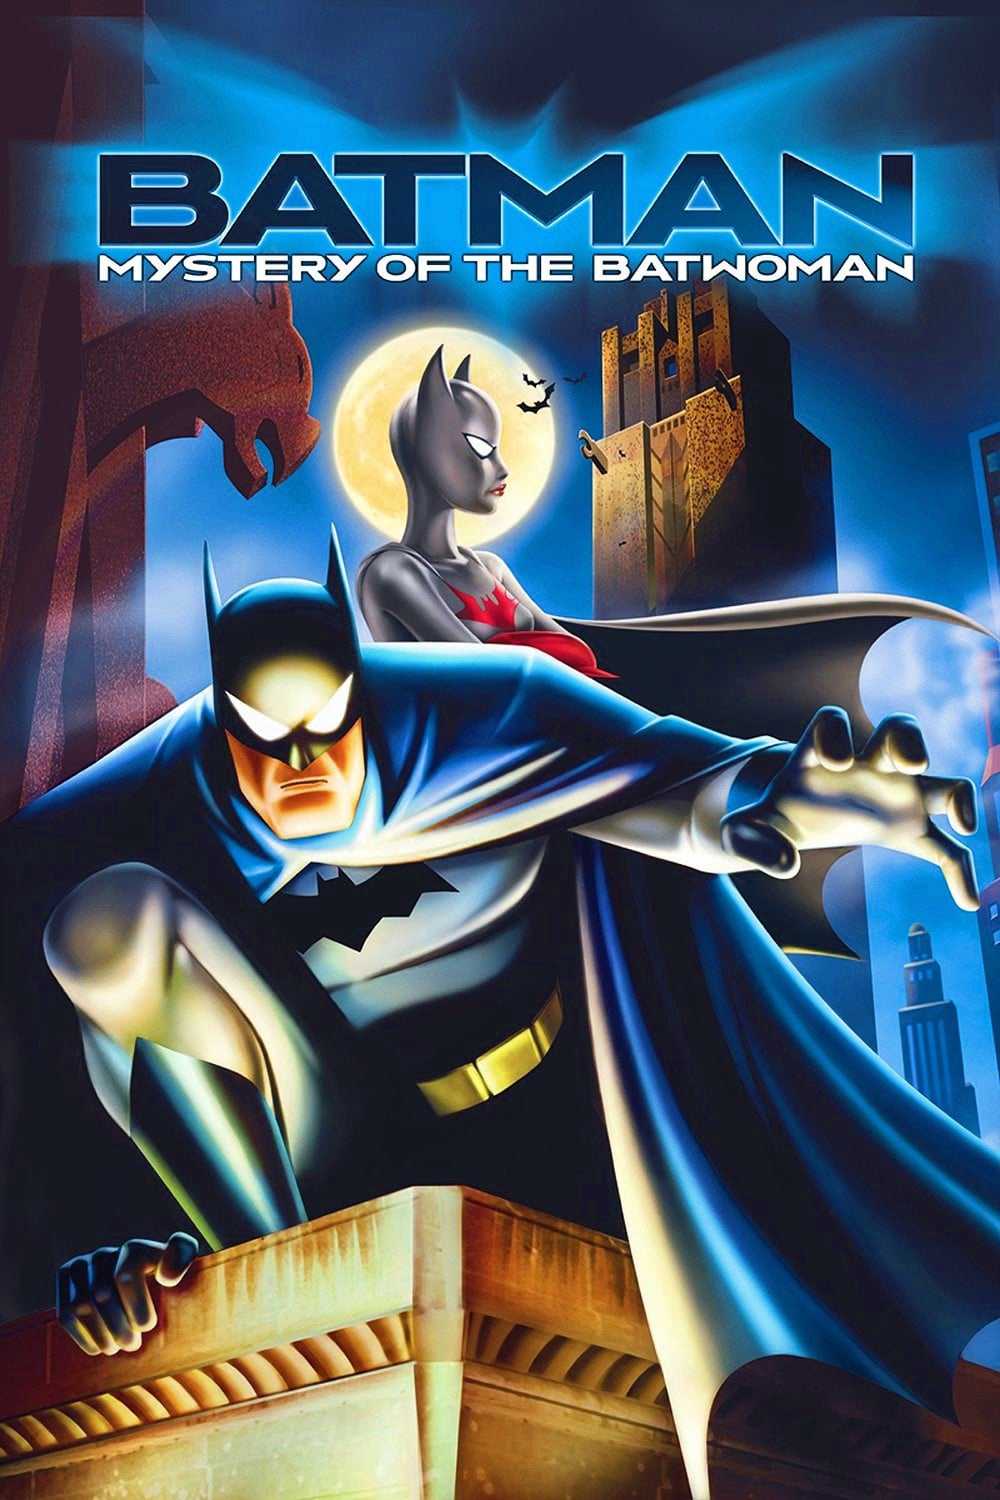 Batman: bí ẩn dơi nữ - Batman: mystery of the batwoman